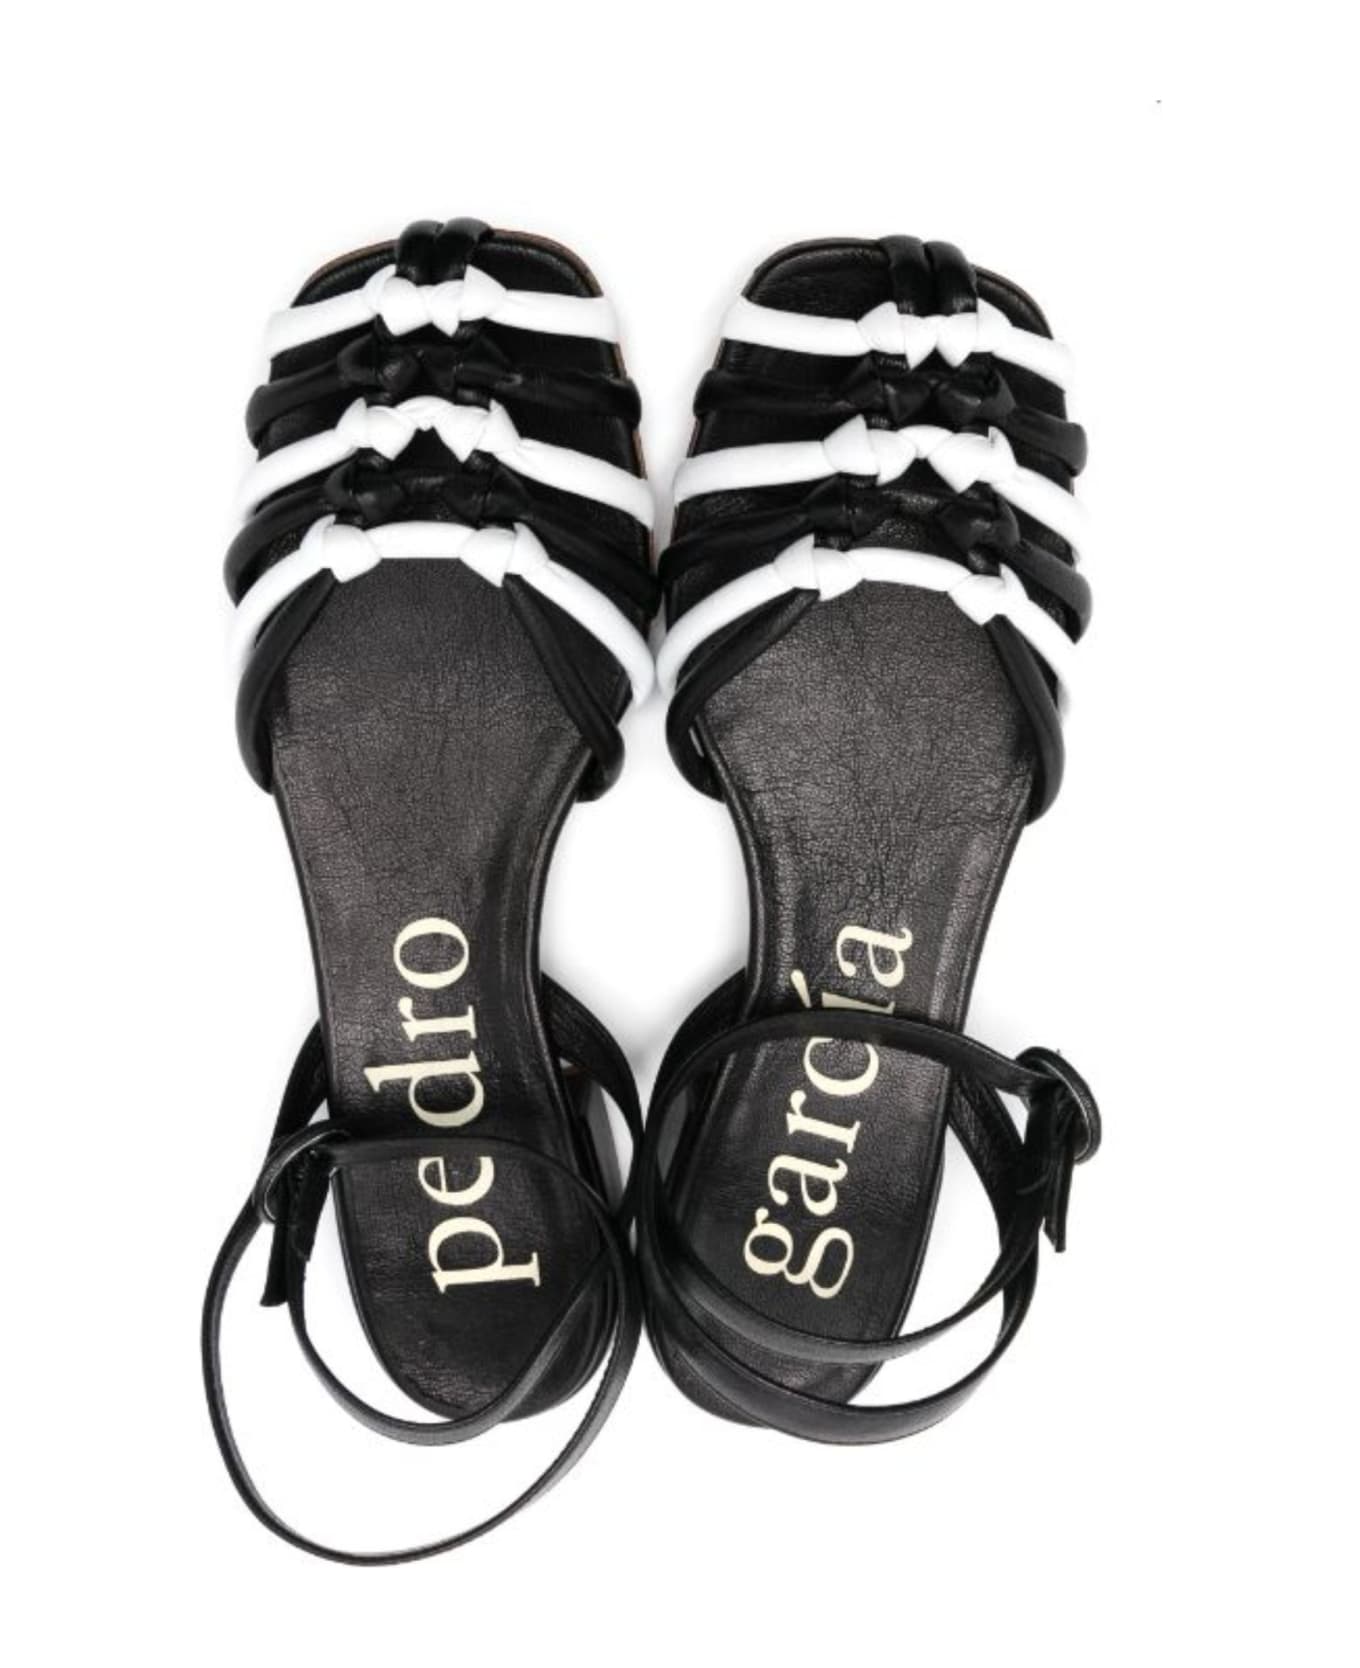 Pedro Garcia Black And White Leather Sandals - Black